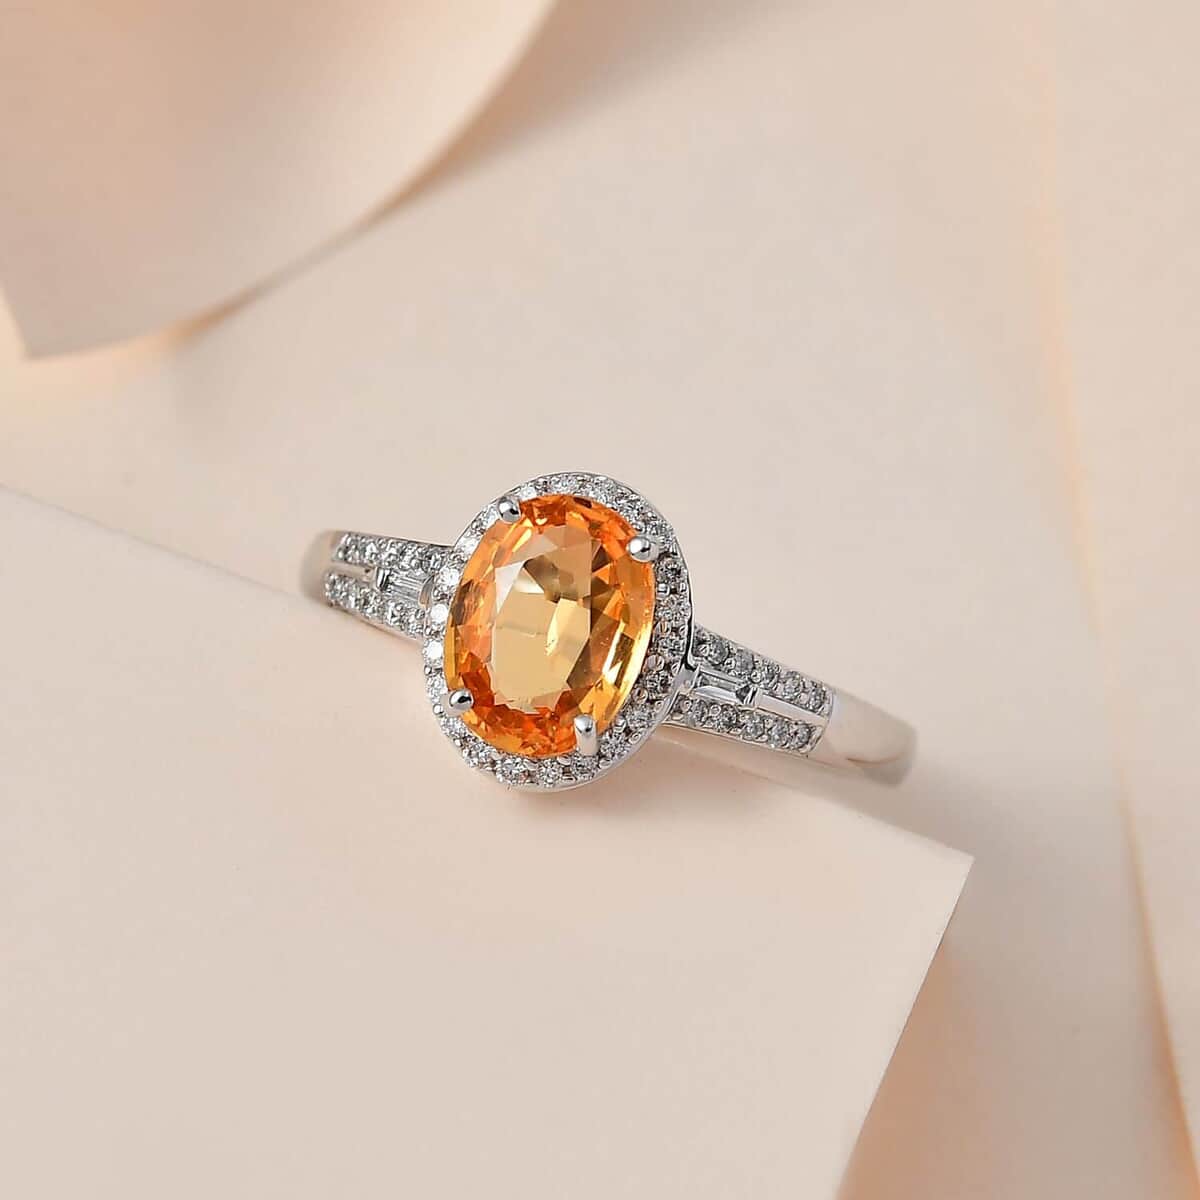 Luxoro 10K White Gold Premium Natural Ceylon Orange Sapphire and G-H I2 Diamond Halo Ring (Size 10.0) 1.65 ctw image number 1